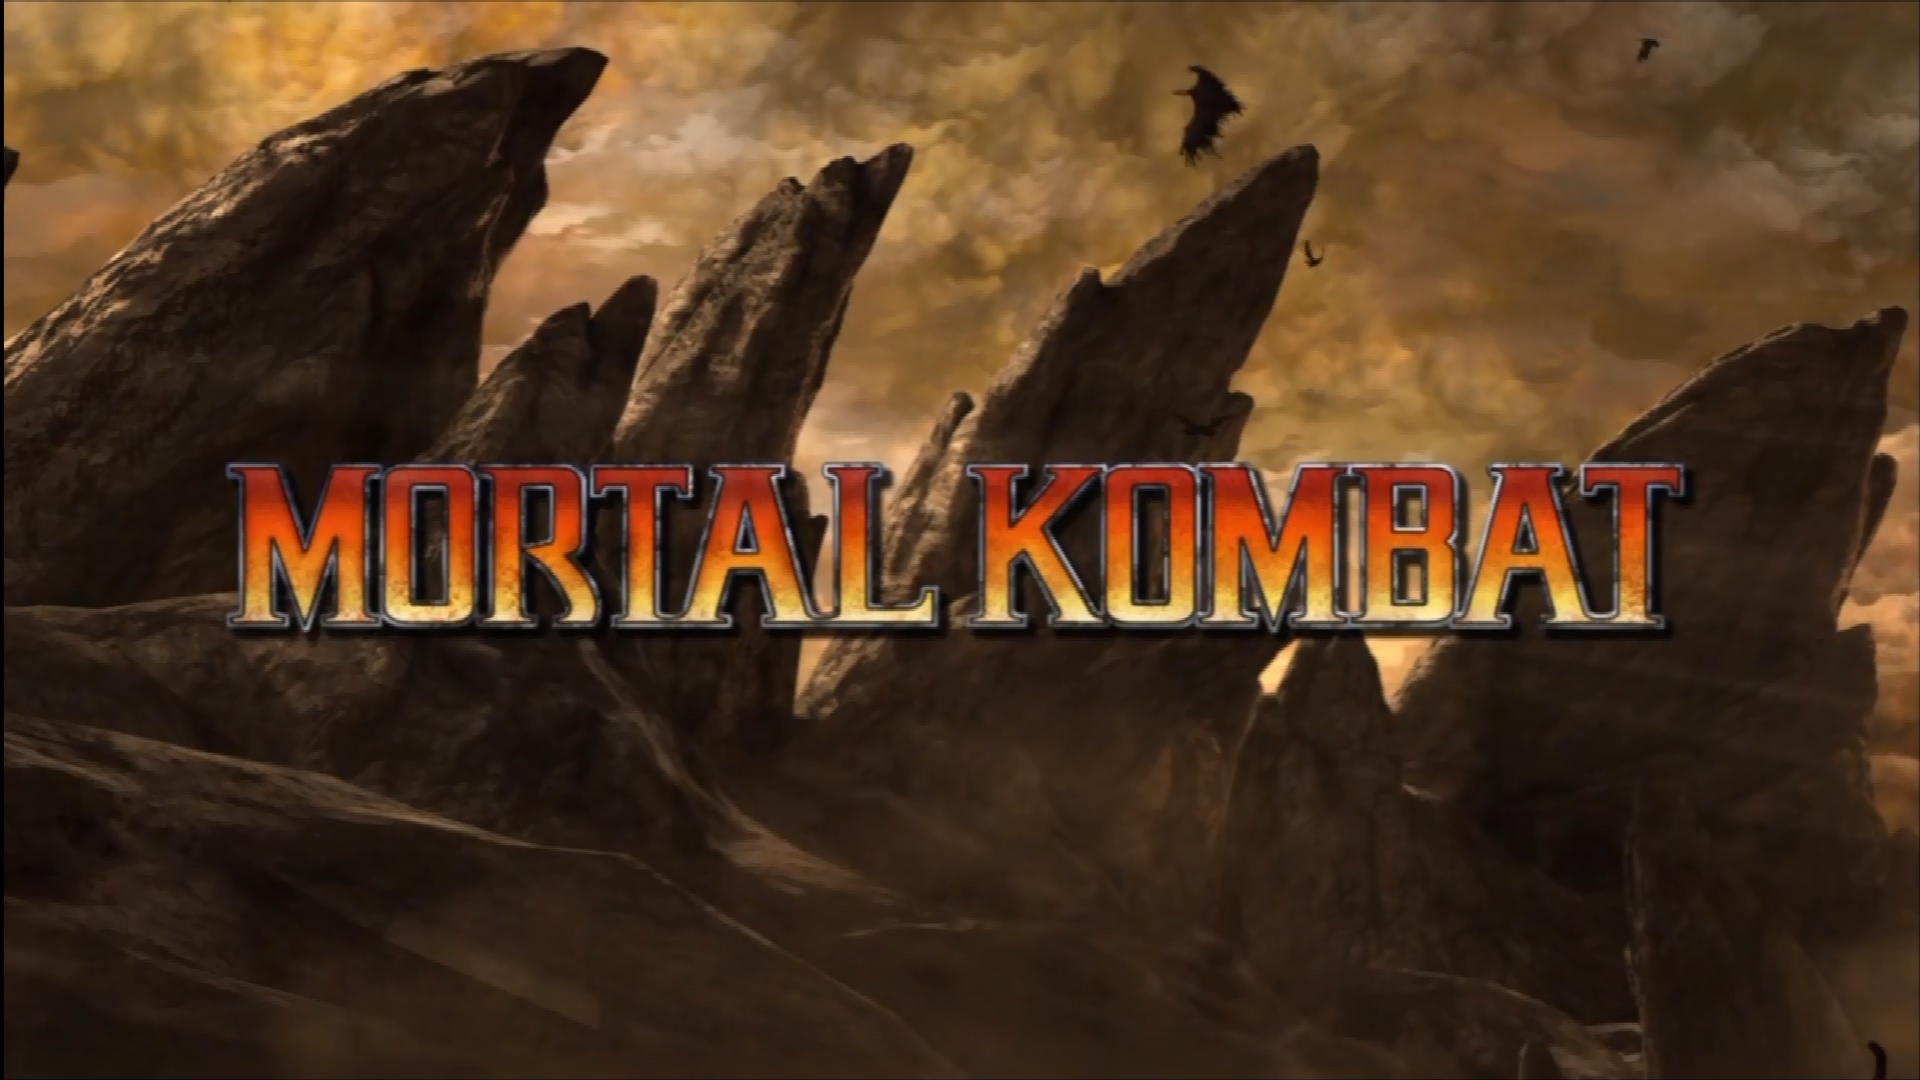 Mortal Kombat (2011) — StrategyWiki  Strategy guide and game reference wiki